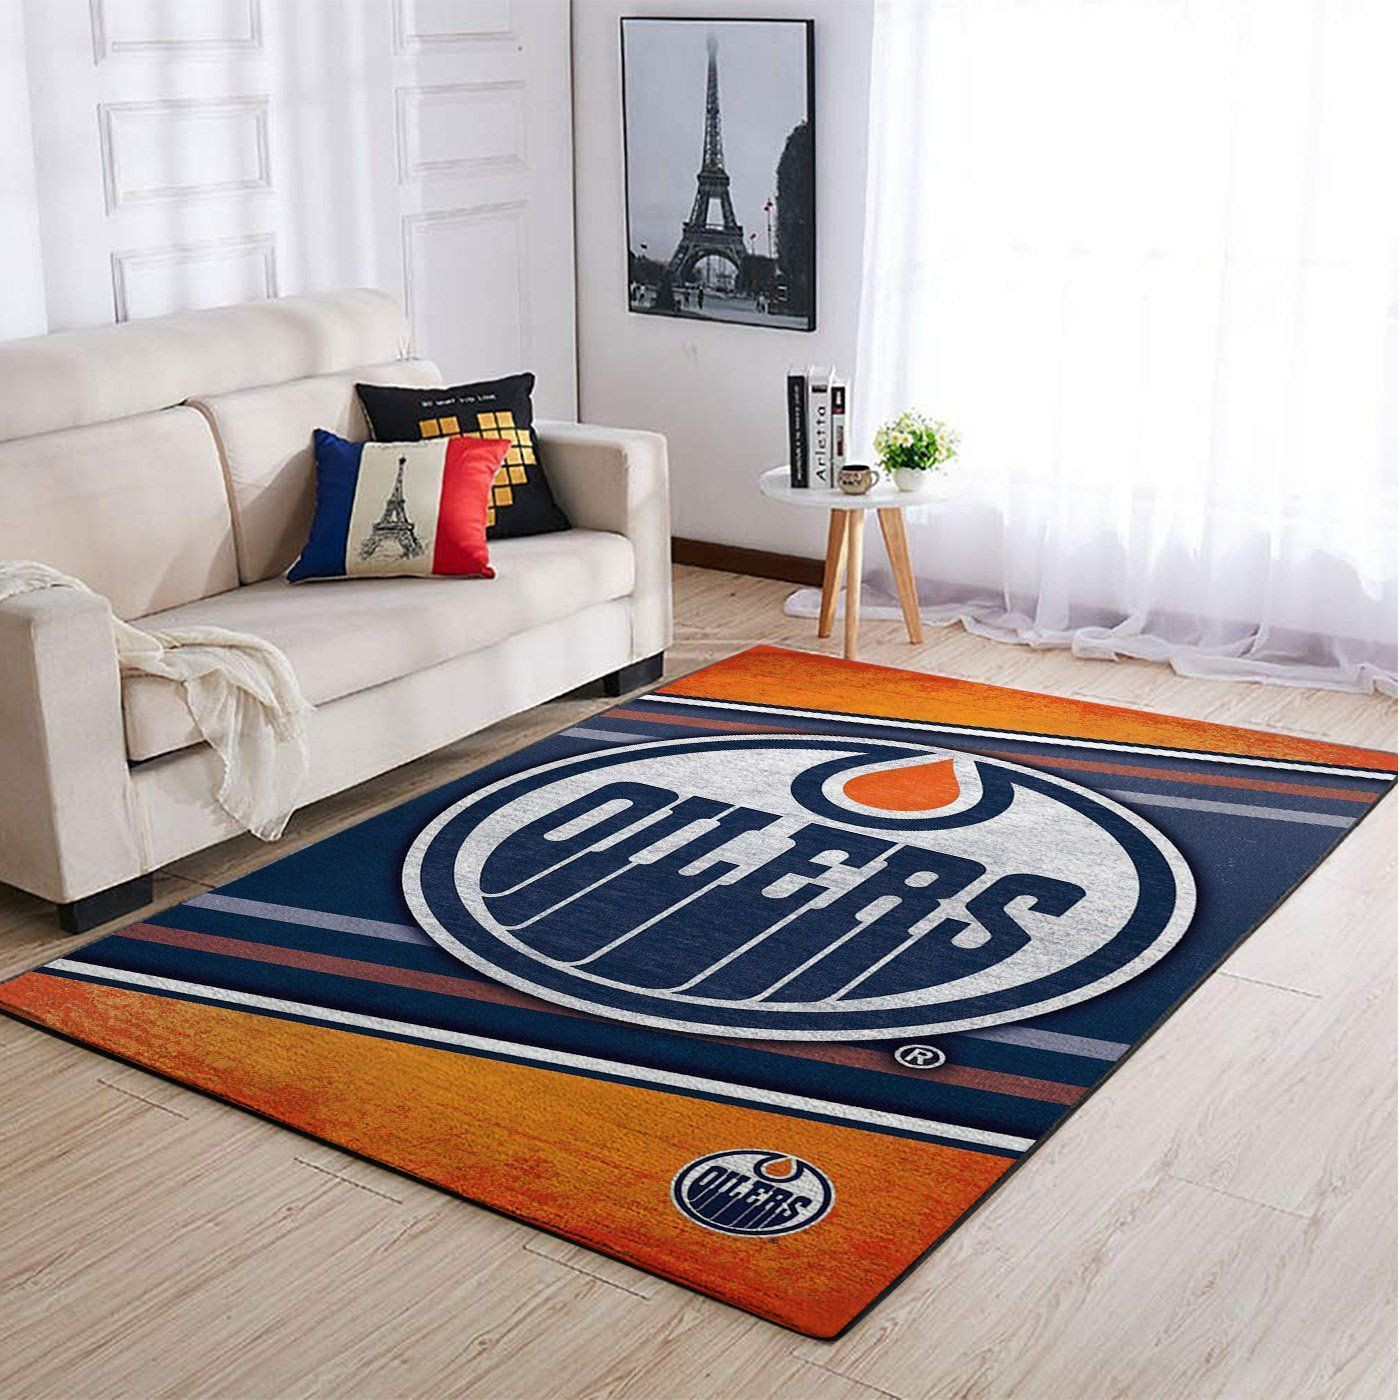 Edmonton Oilers Nhls Team Logo Type 7097 Rug Area Carpet Home Decor Living Room